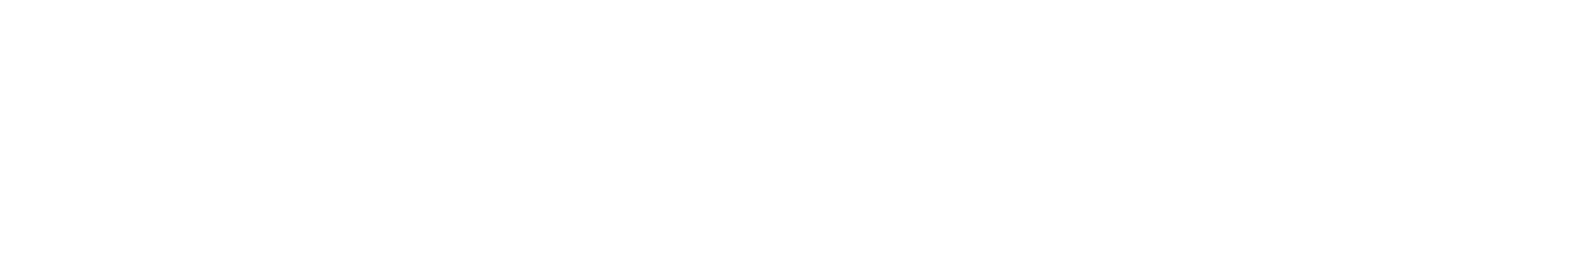 Merck KGaA logo large for dark backgrounds (transparent PNG)